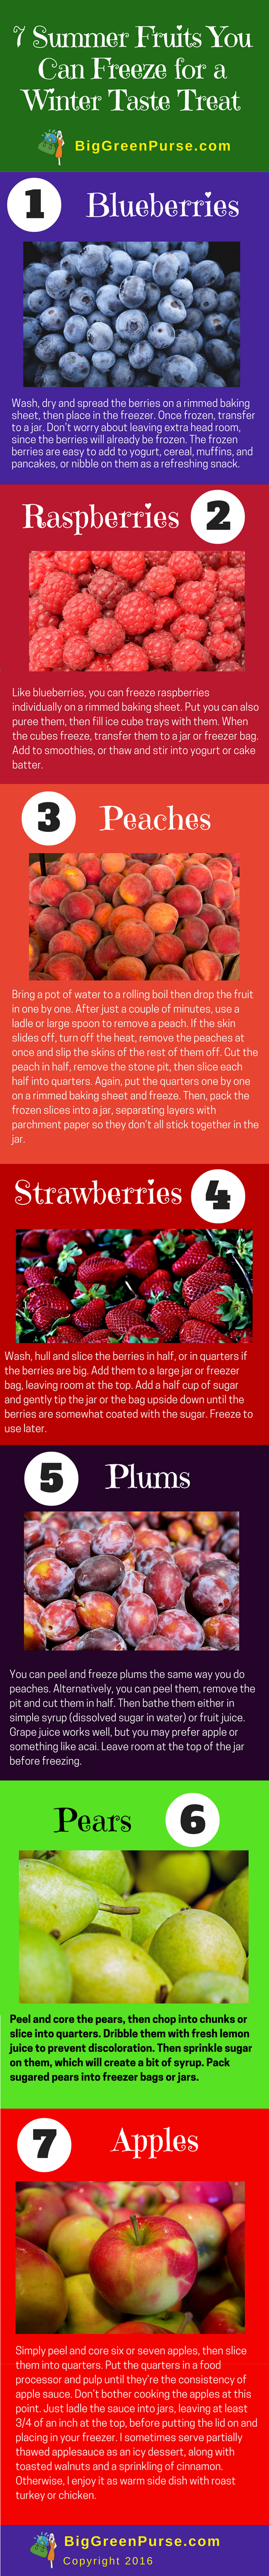 fruit-infographic3